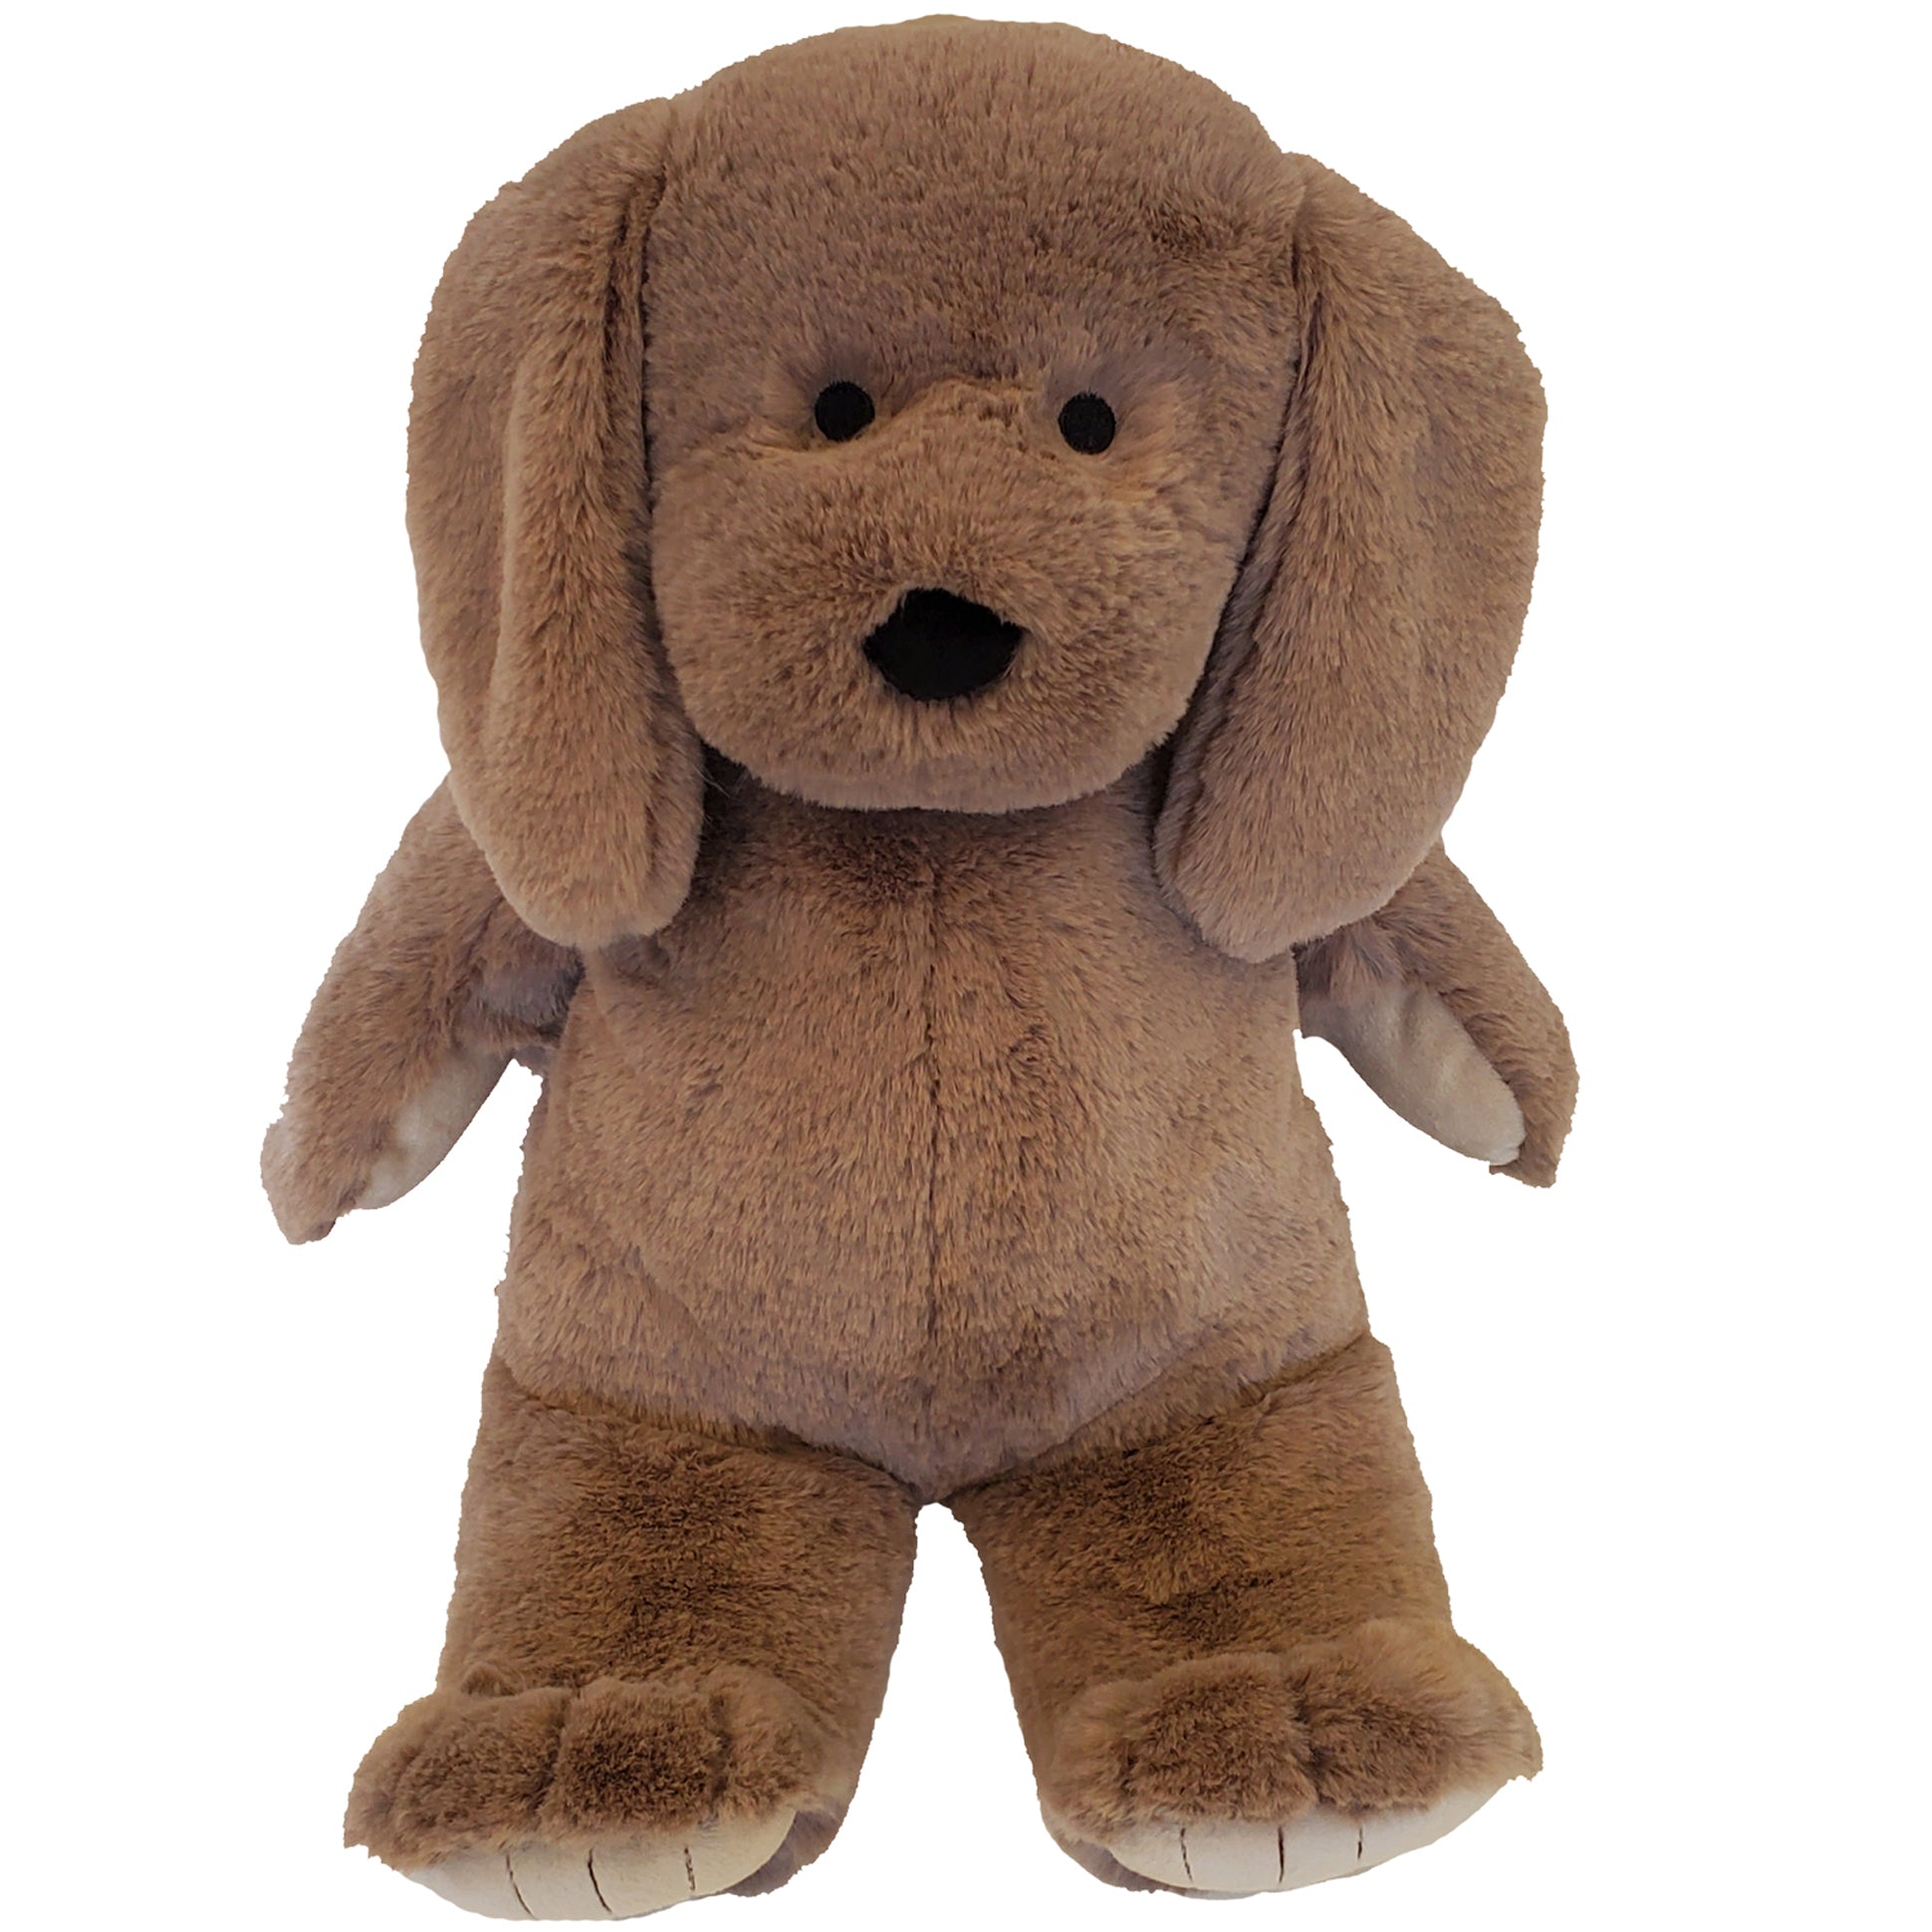 Cuddle Buddy Puppy - Light Brown - Heated Stuffed Animal